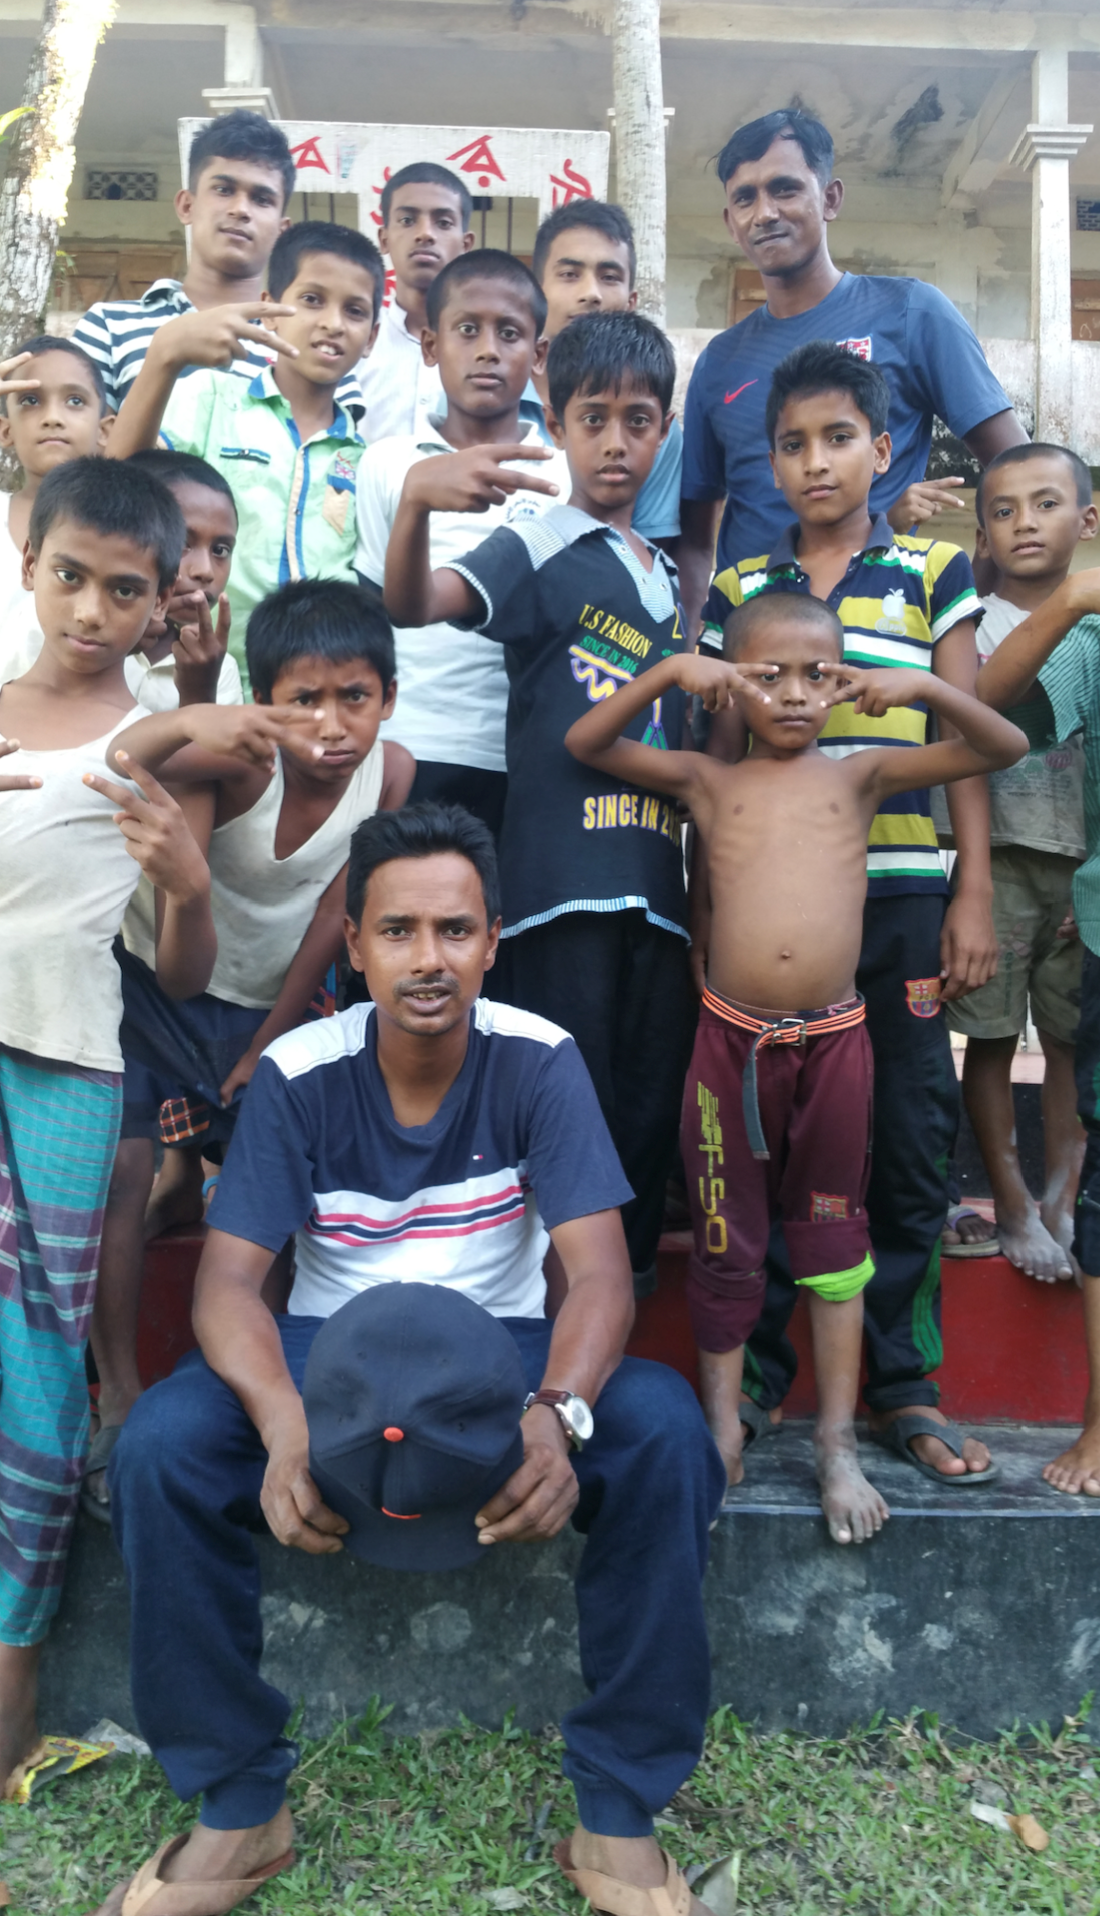 Bangledesh village residents